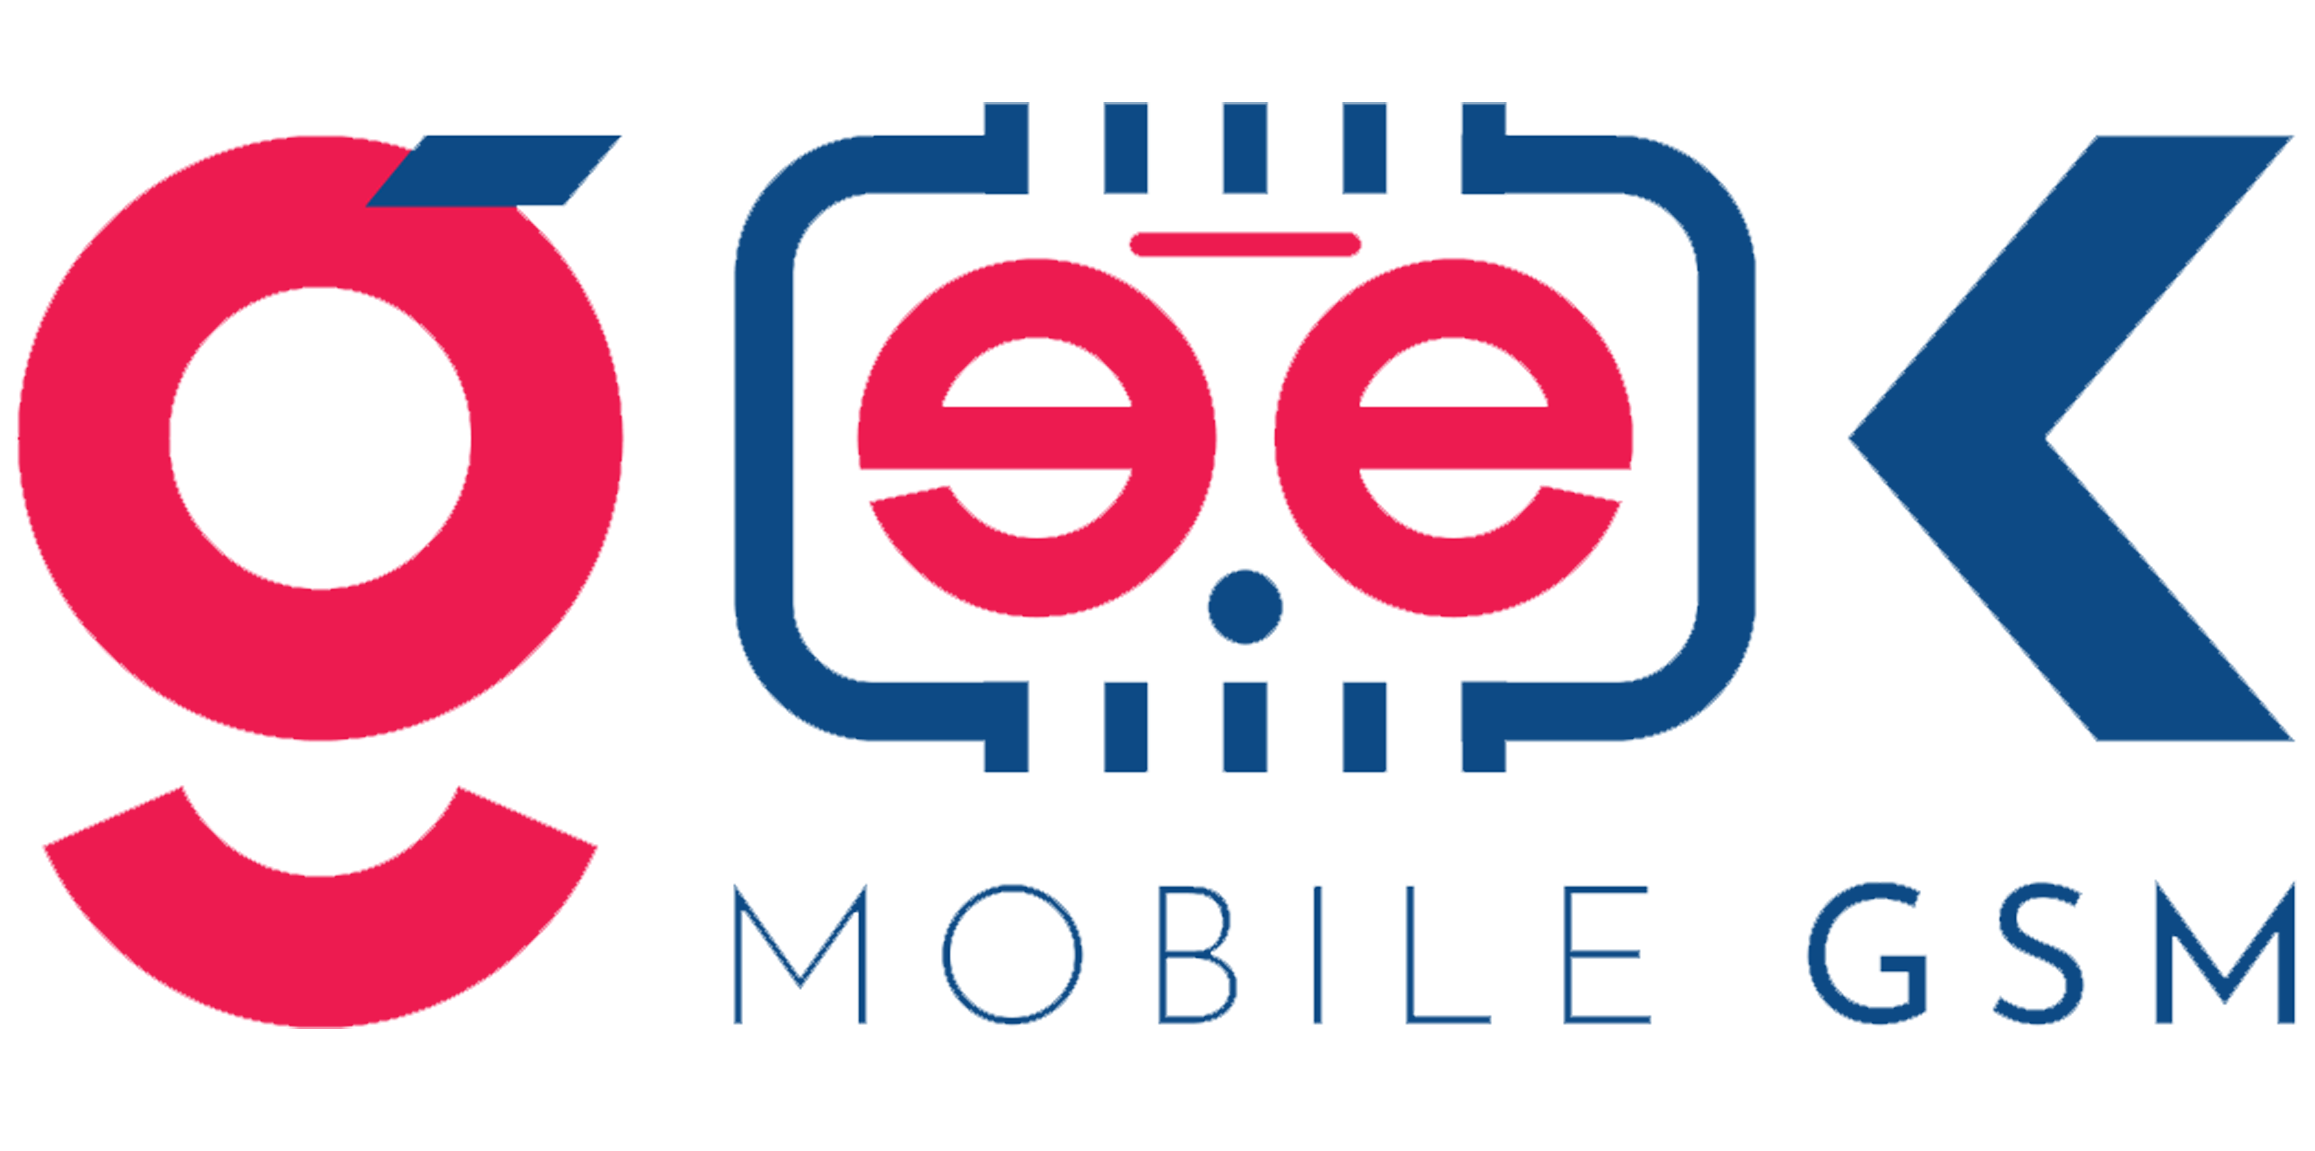 Geek Mobile GSM